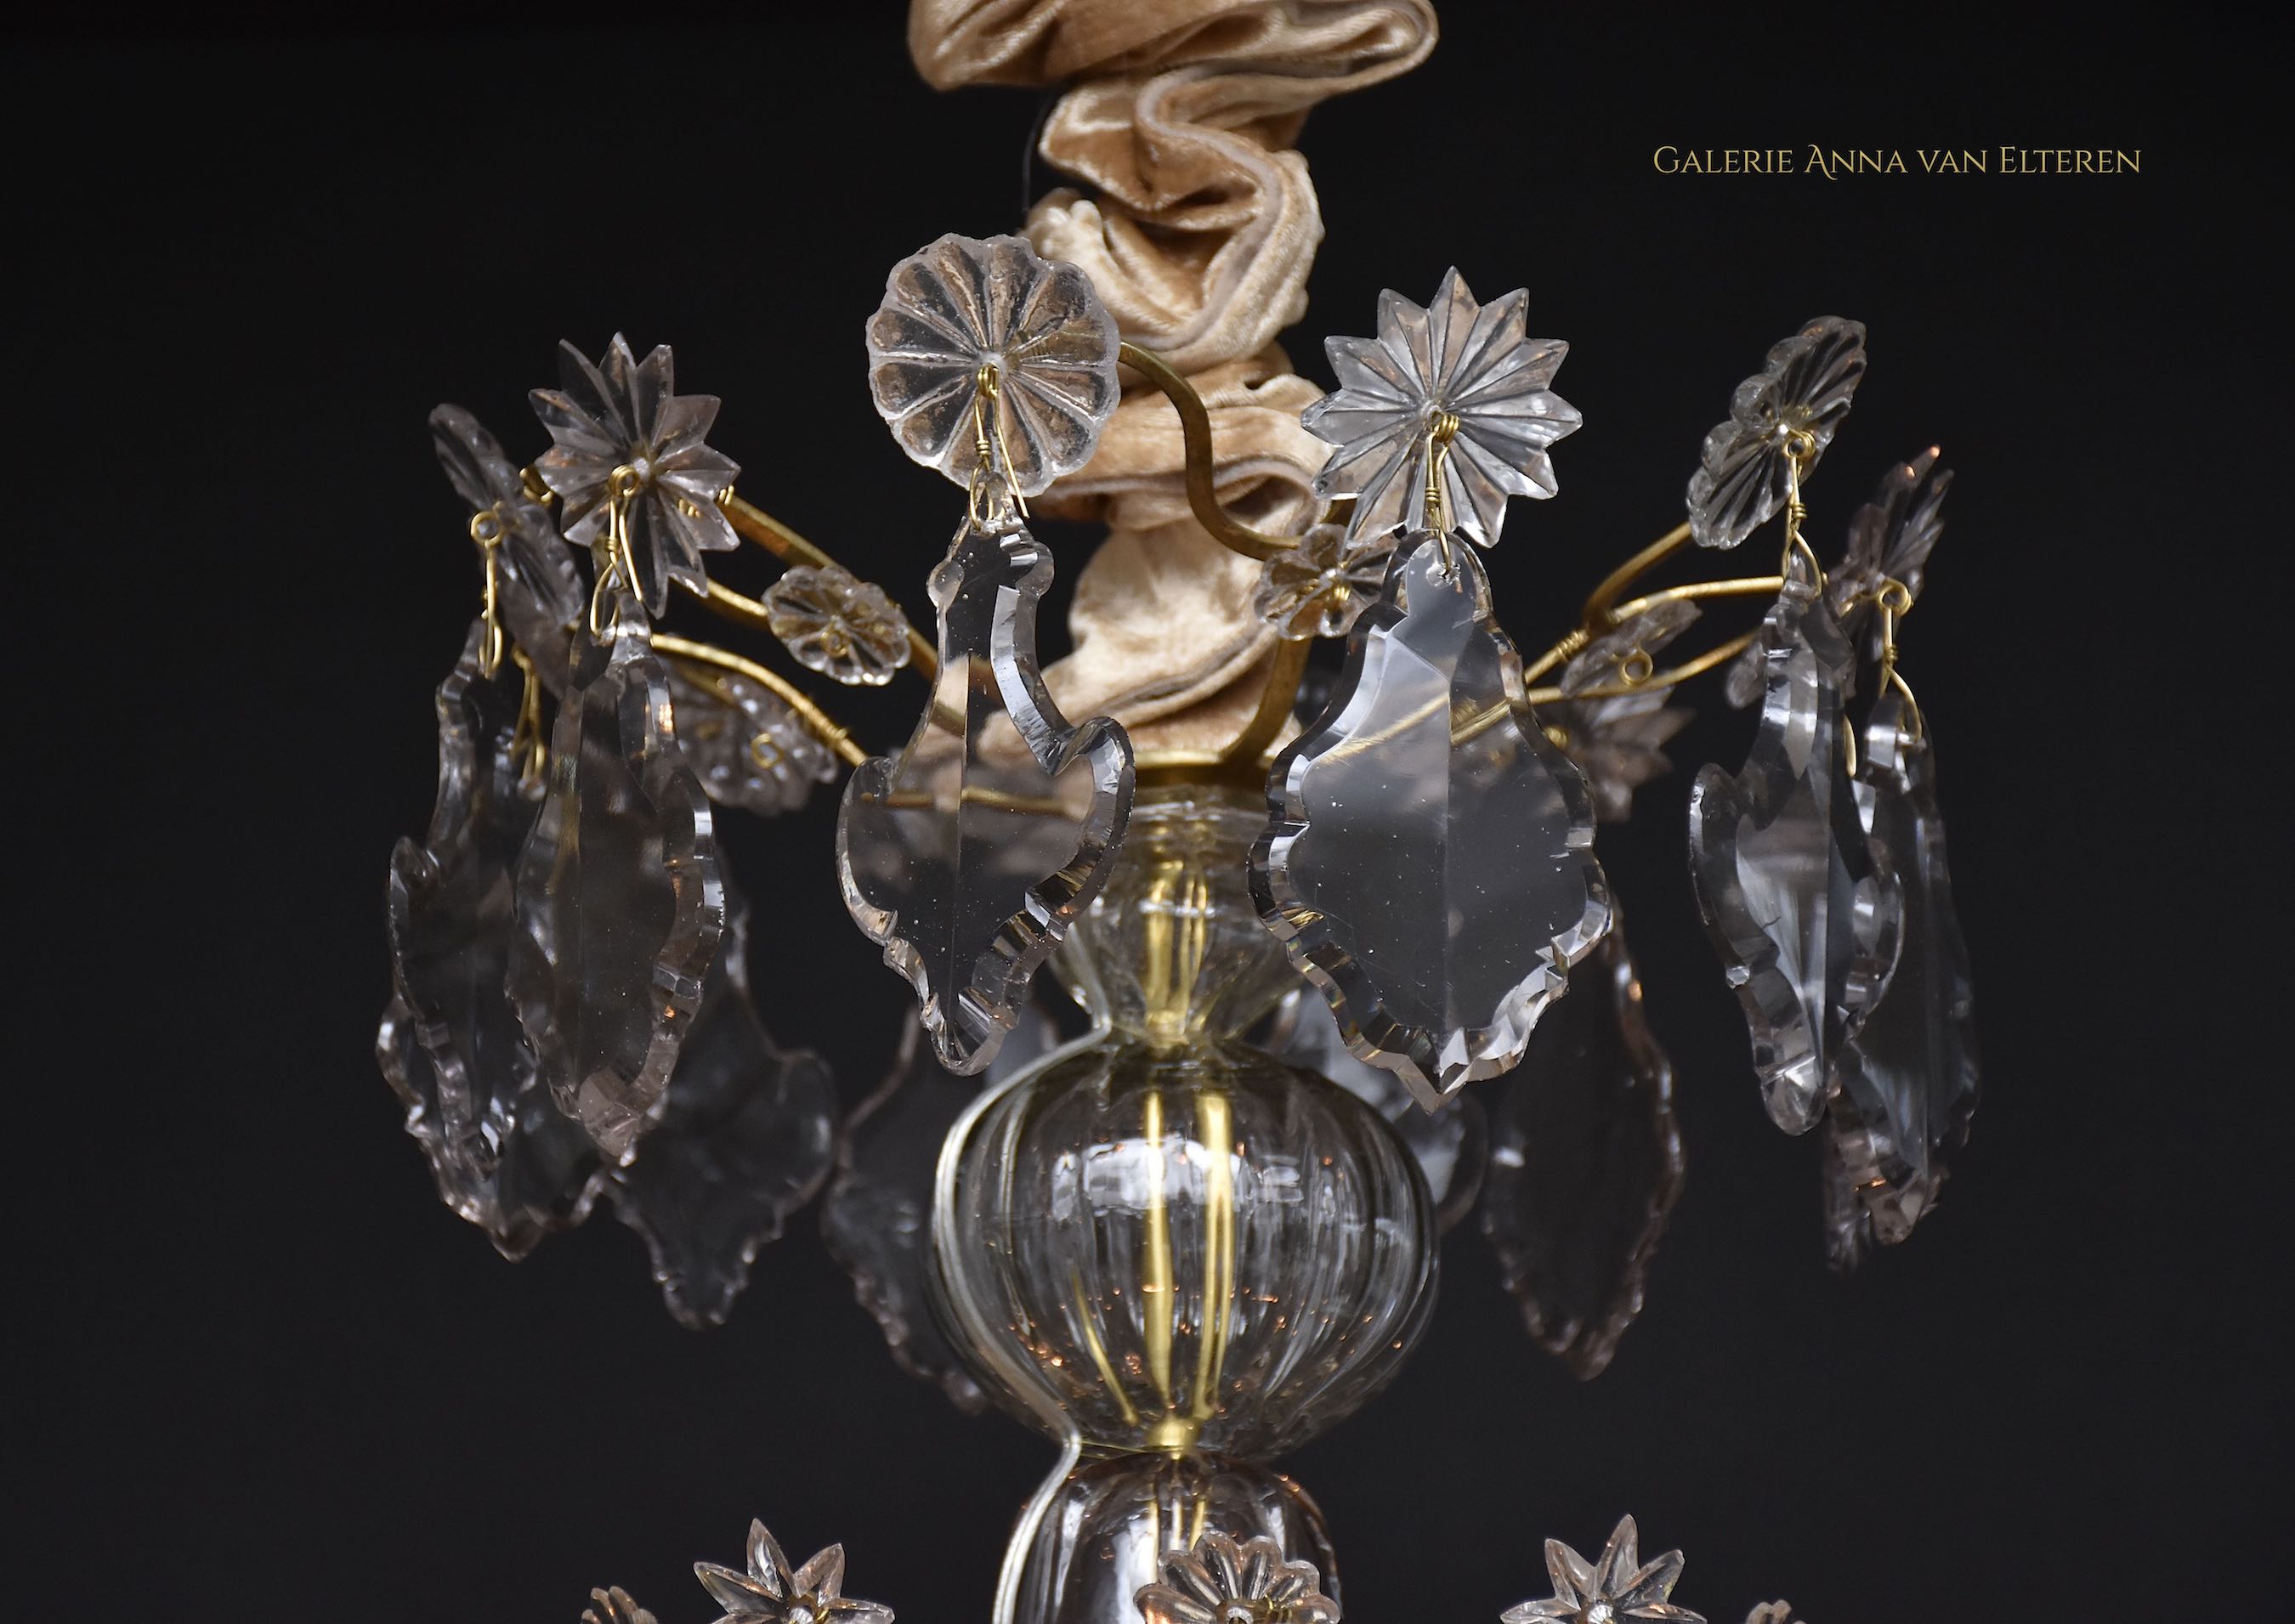 Elegant 18th c. French chandelier epoque Louis XV